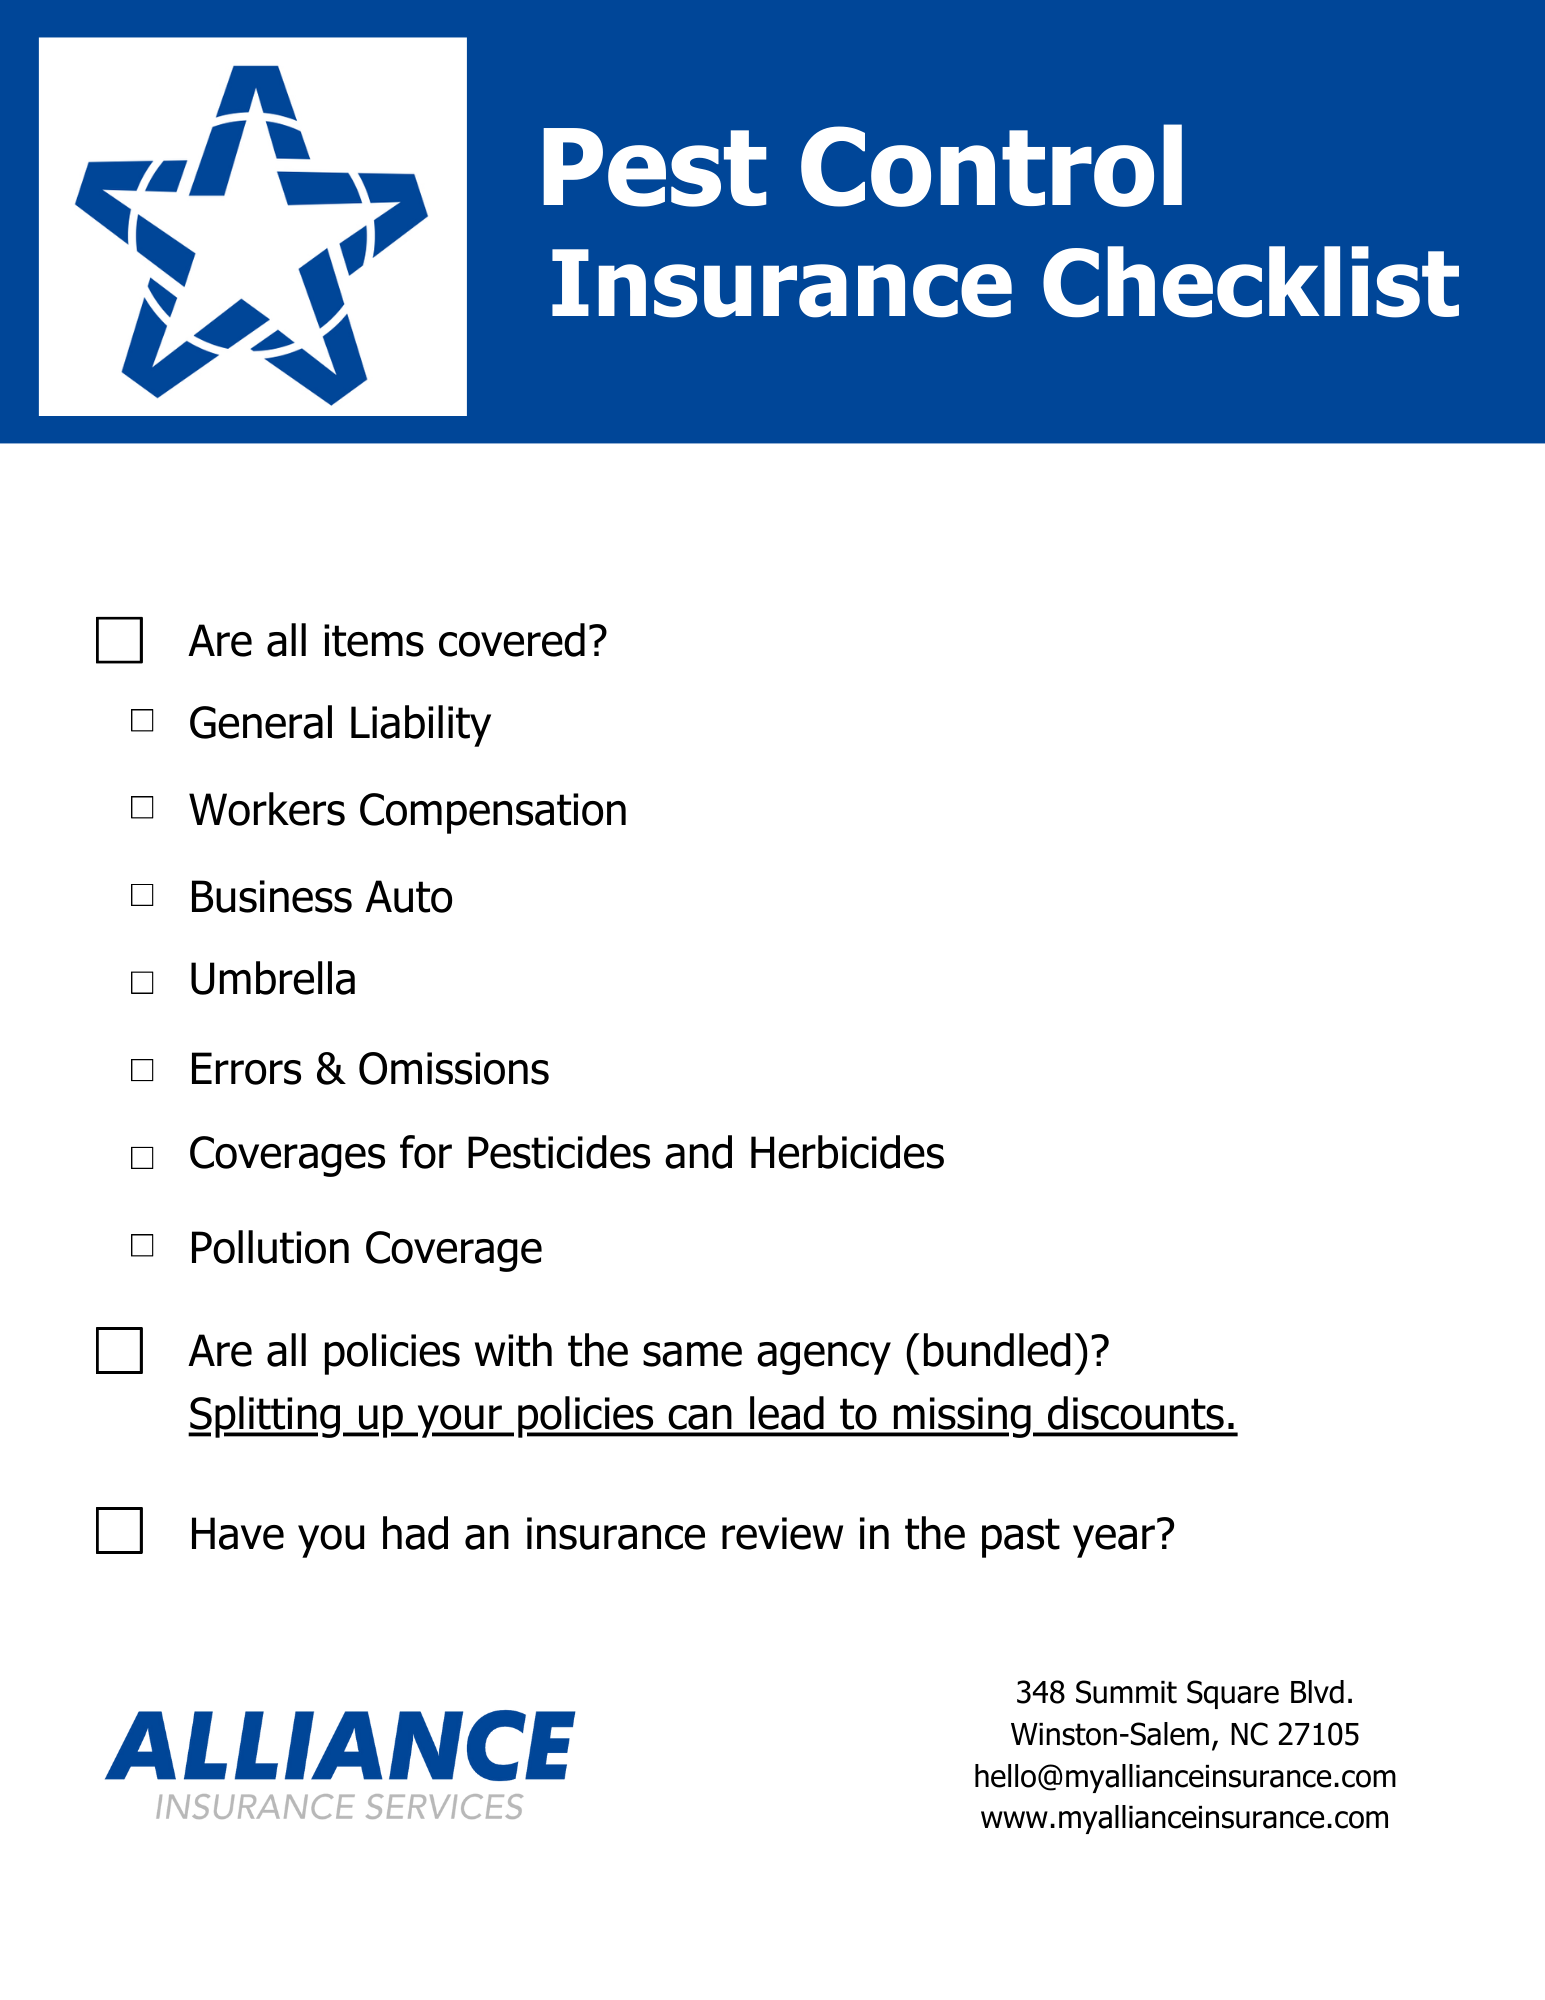 Pest Control Insurance Checklist (1)